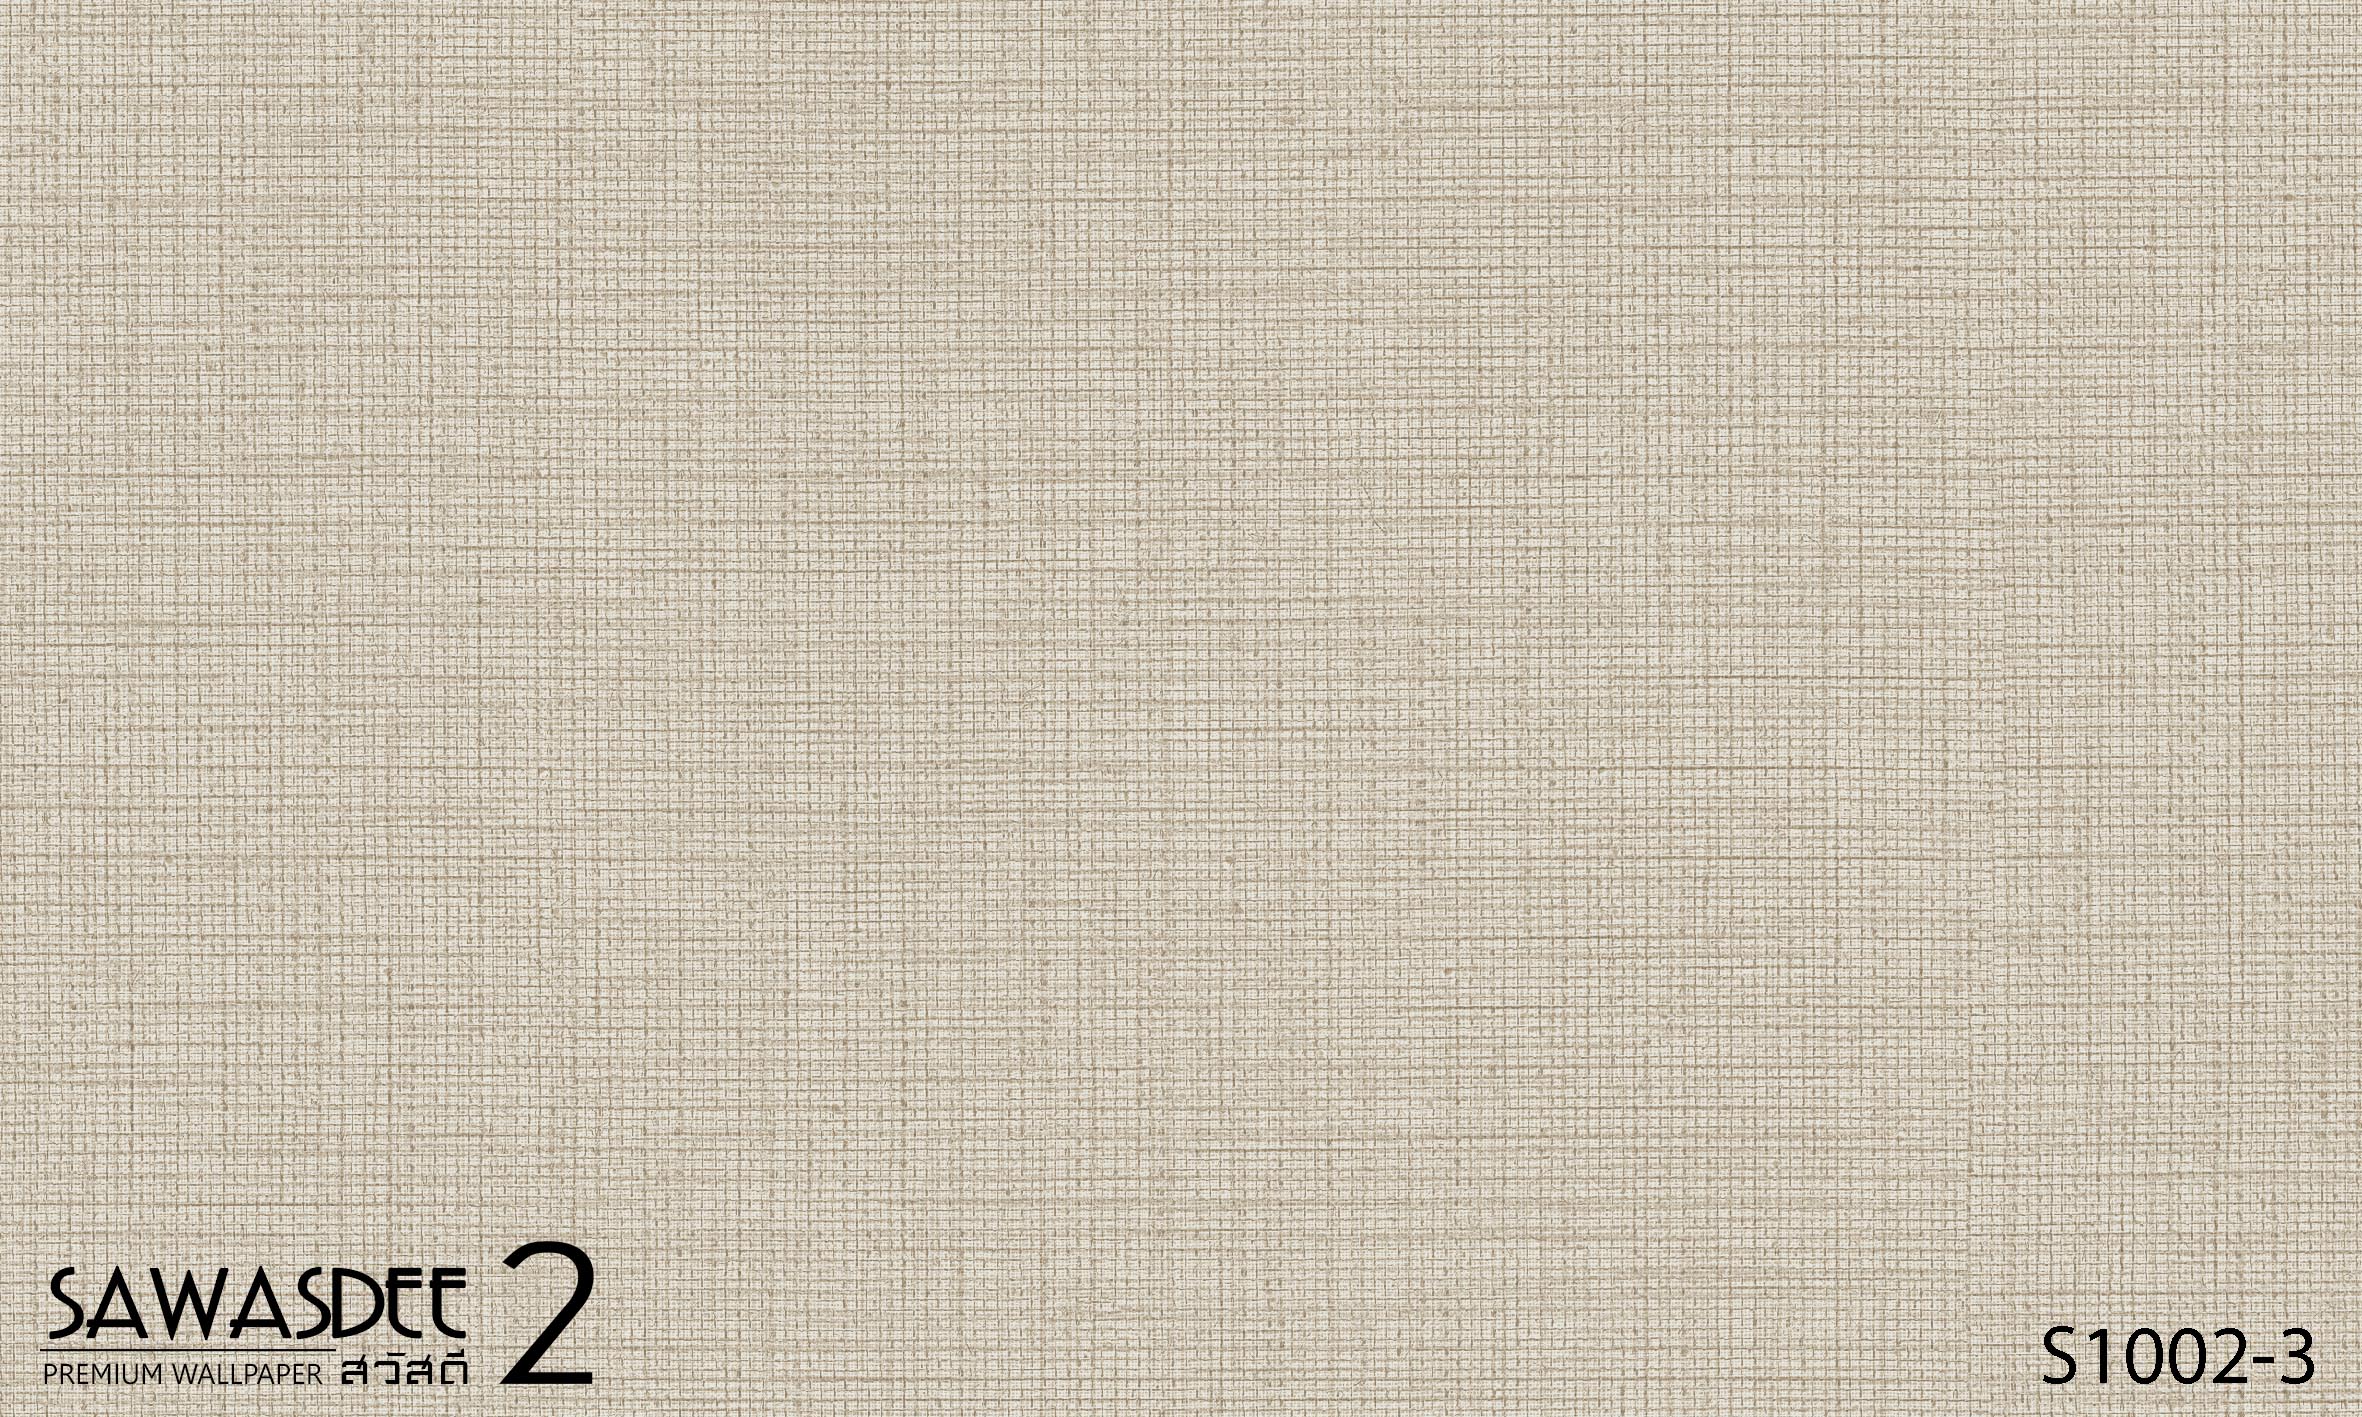 Wallpaper (SAWASDEE 2) S1002-3